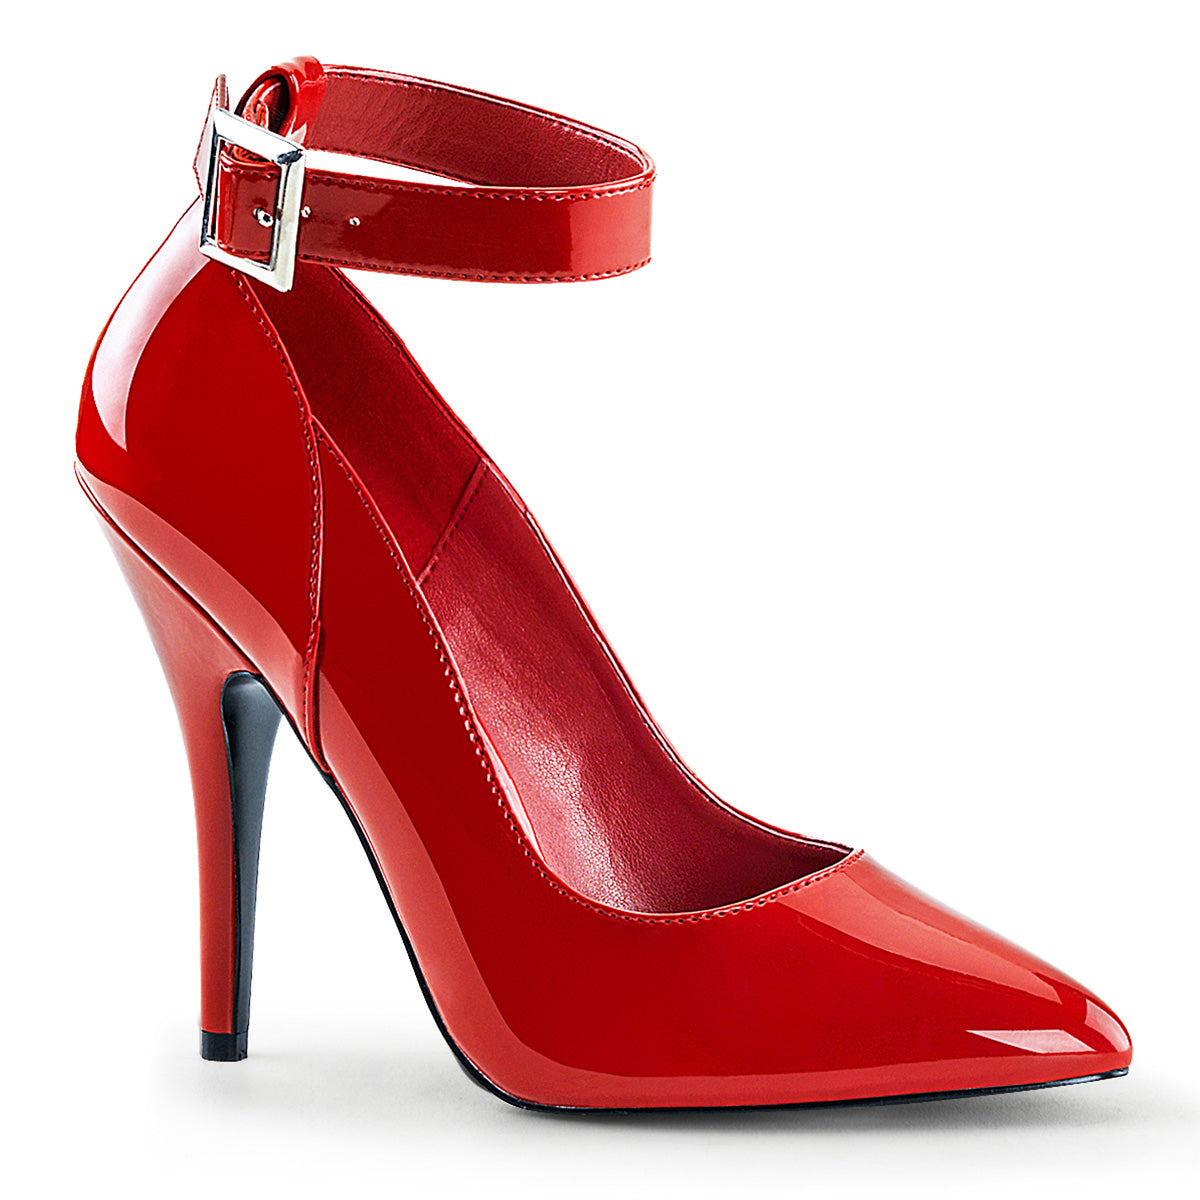 SEDUCE-431 Pleasers Sexy Shoe 5 Inch Heel Red Fetish Footwear